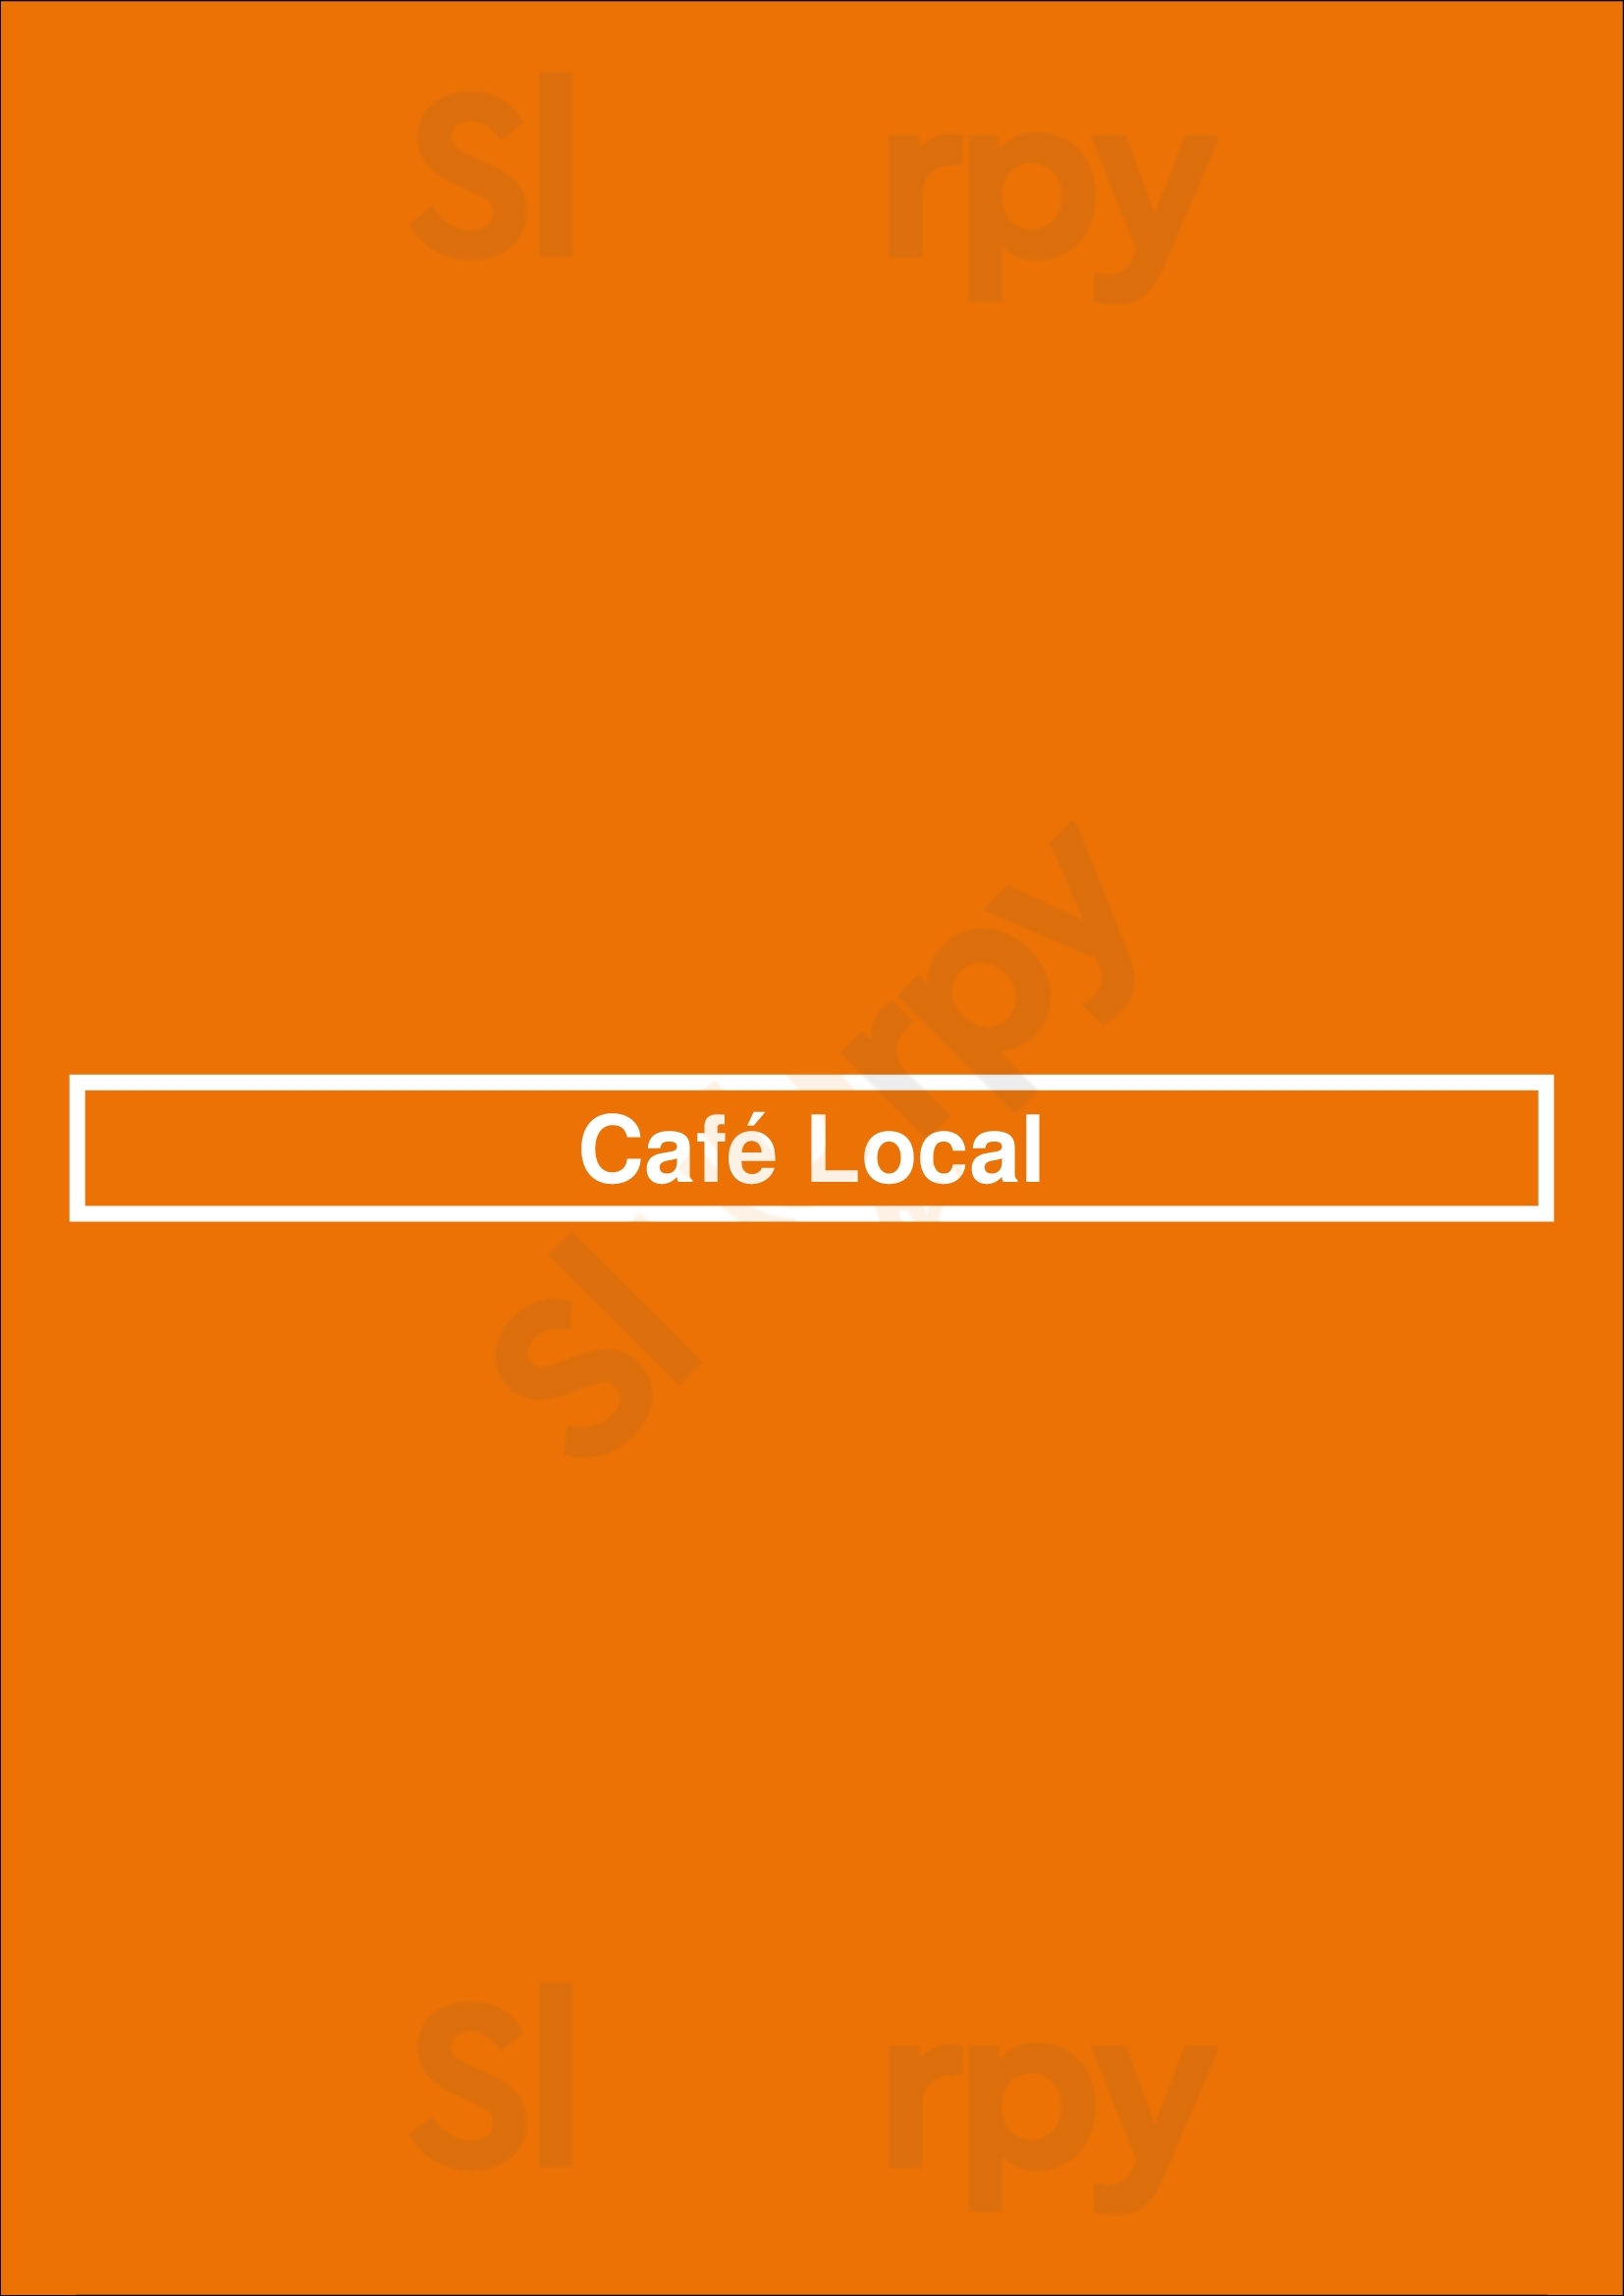 Café Local Maastricht Menu - 1